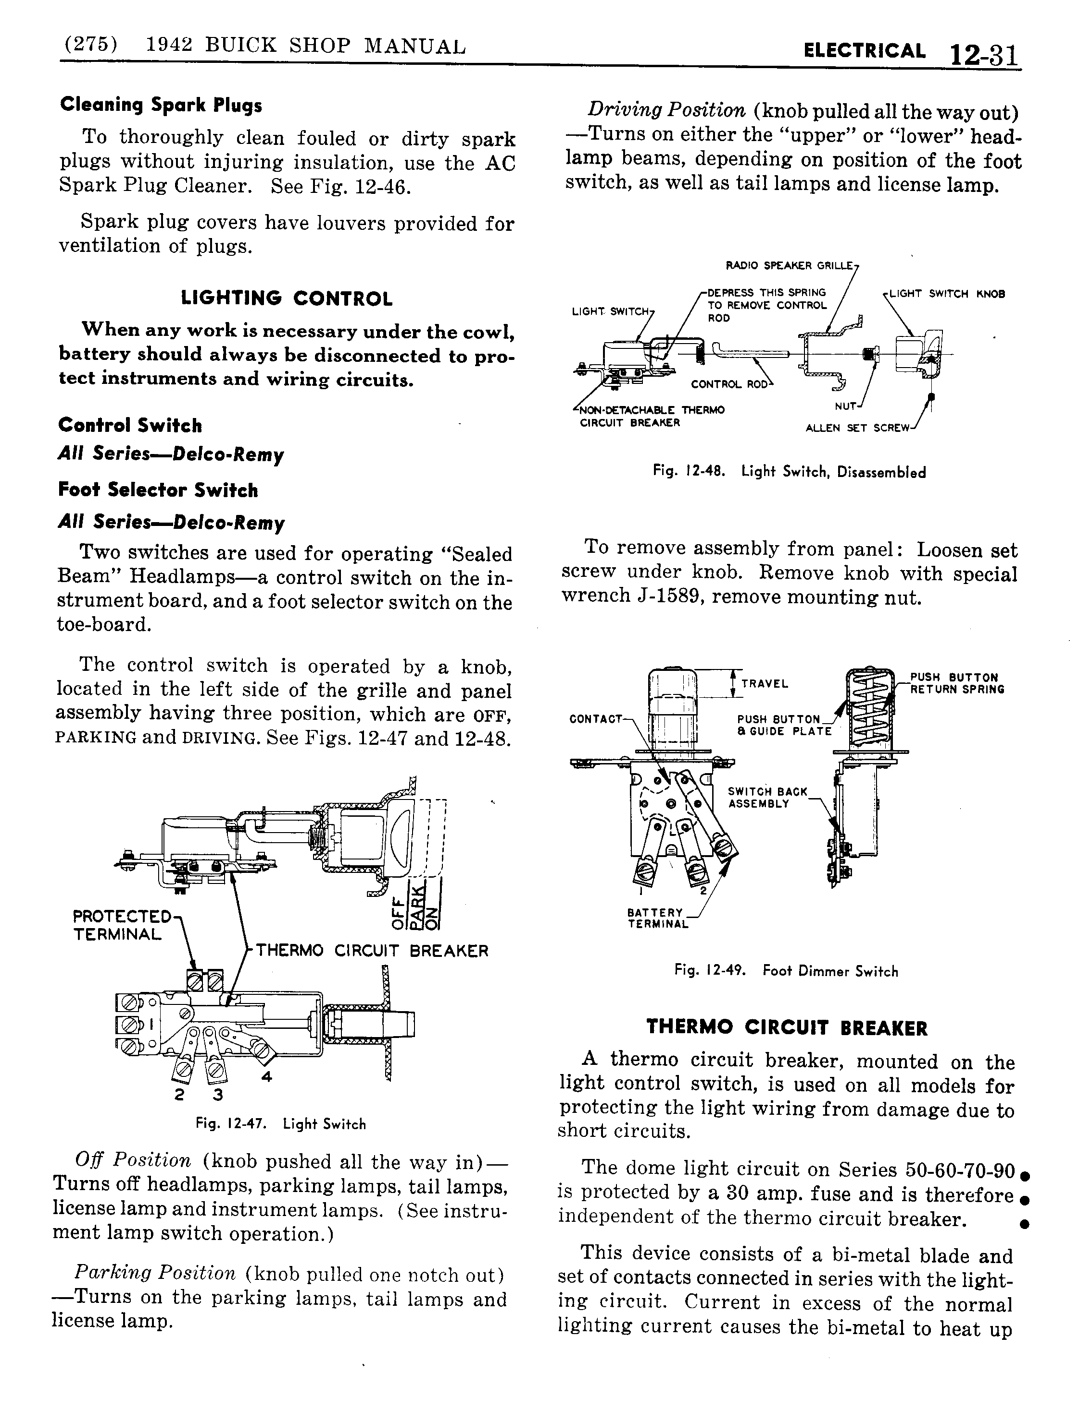 n_13 1942 Buick Shop Manual - Electrical System-031-031.jpg